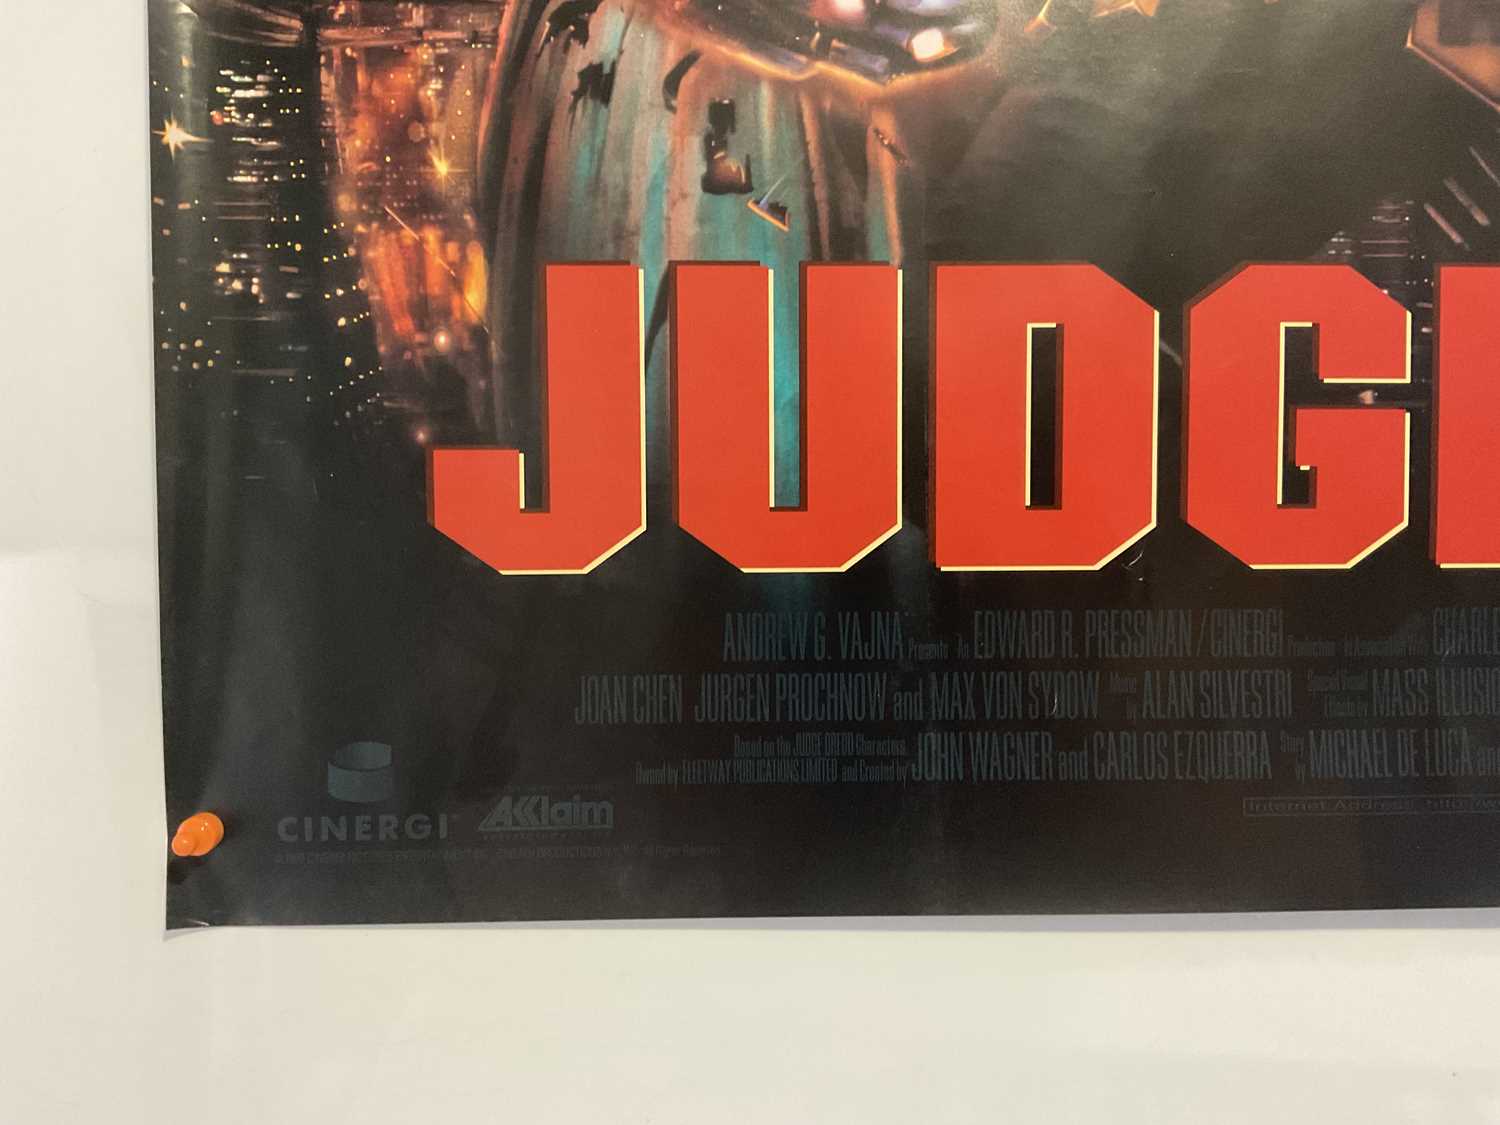 JUDGE DREDD (1995) UK Quad film poster, comic book adaptation starring Sylvester Stallone, artwork - Image 4 of 6